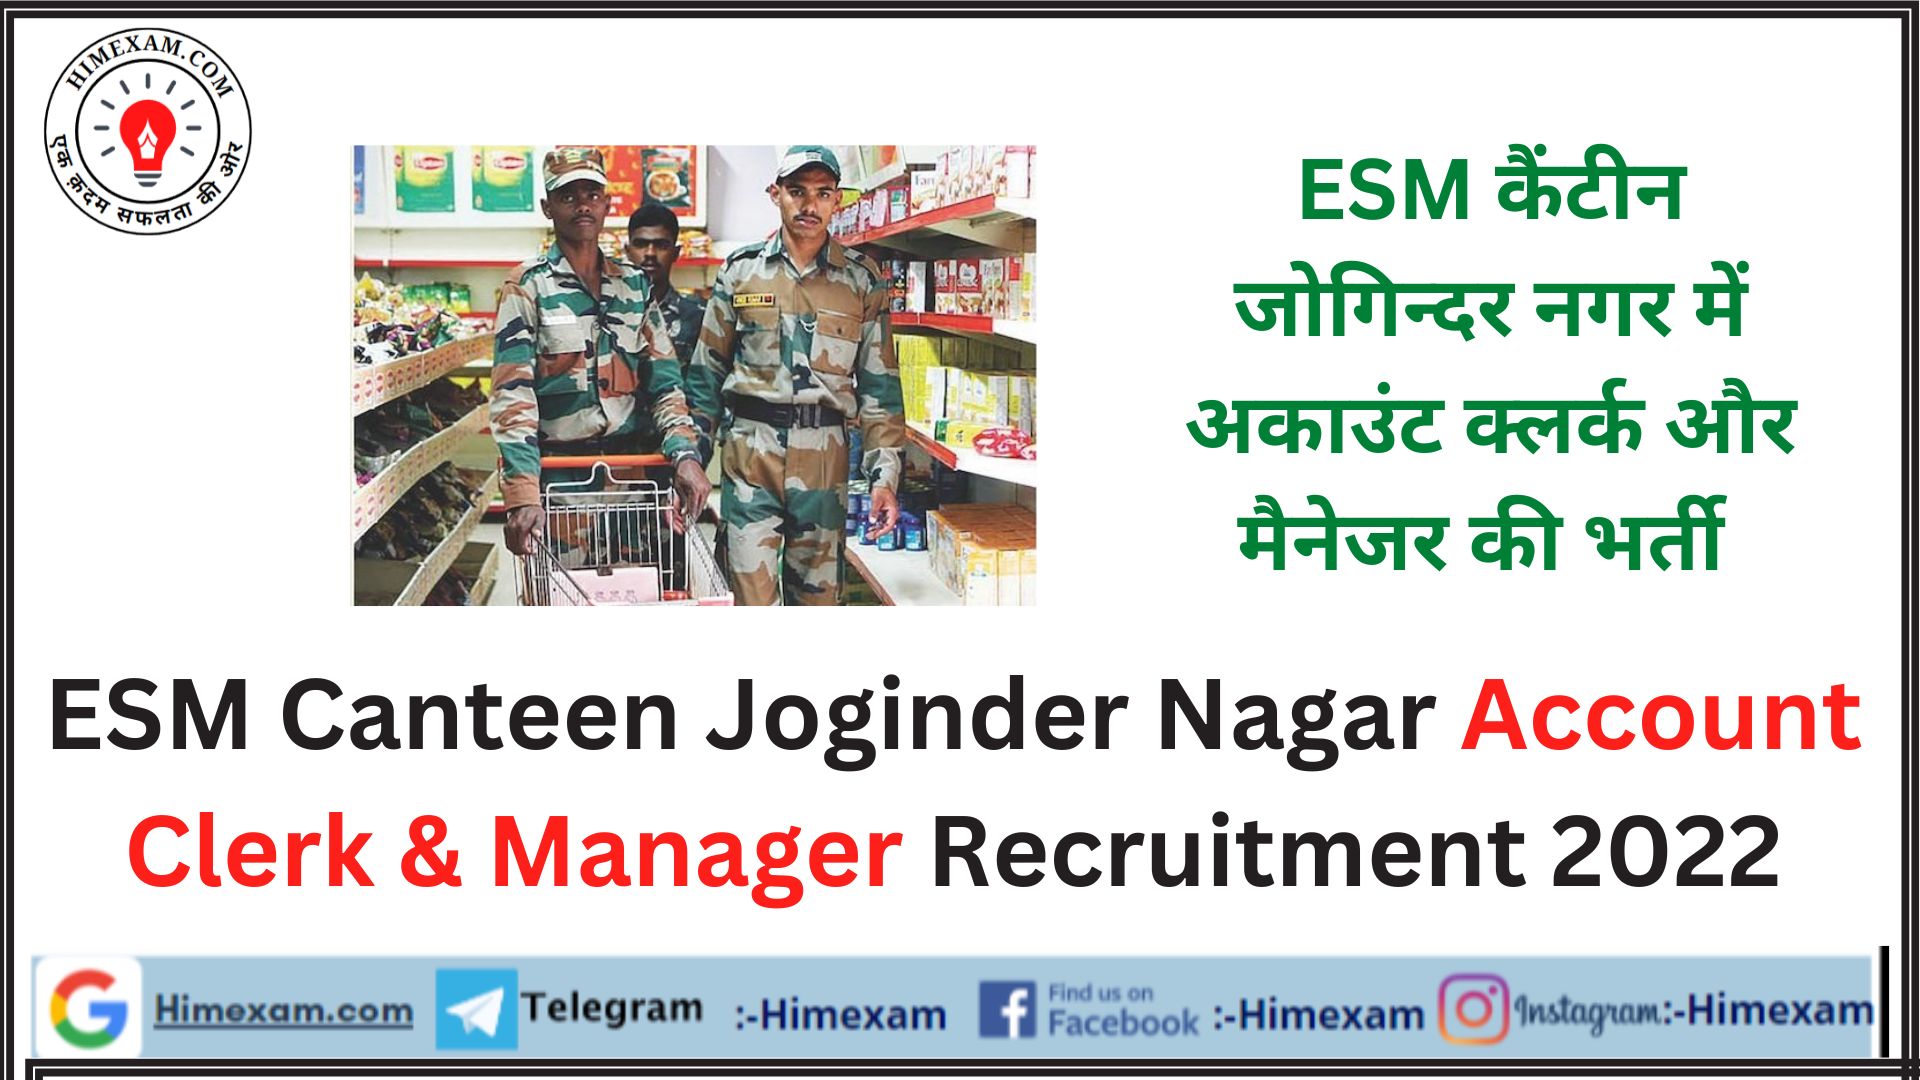 ESM Canteen Joginder Nagar Account Clerk & Manager Recruitment 2022